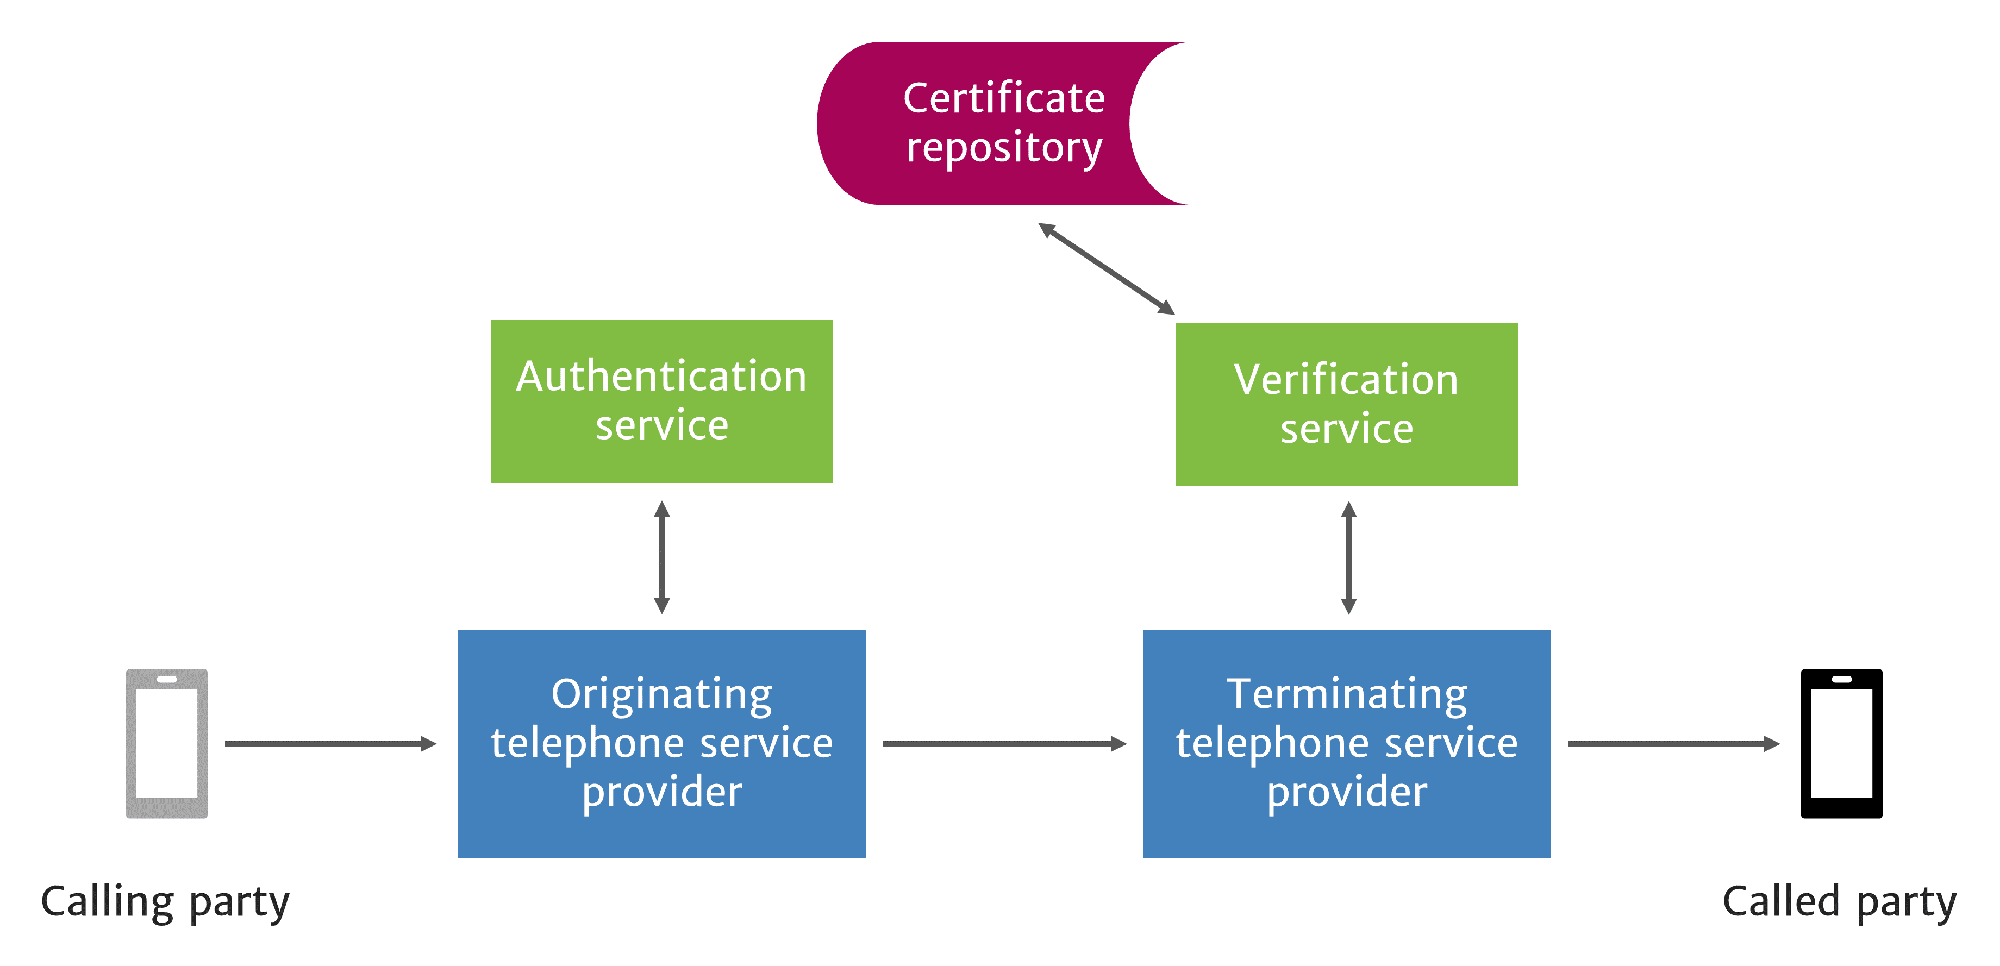 STIR/SHAKEN authenticates and verifies caller ID